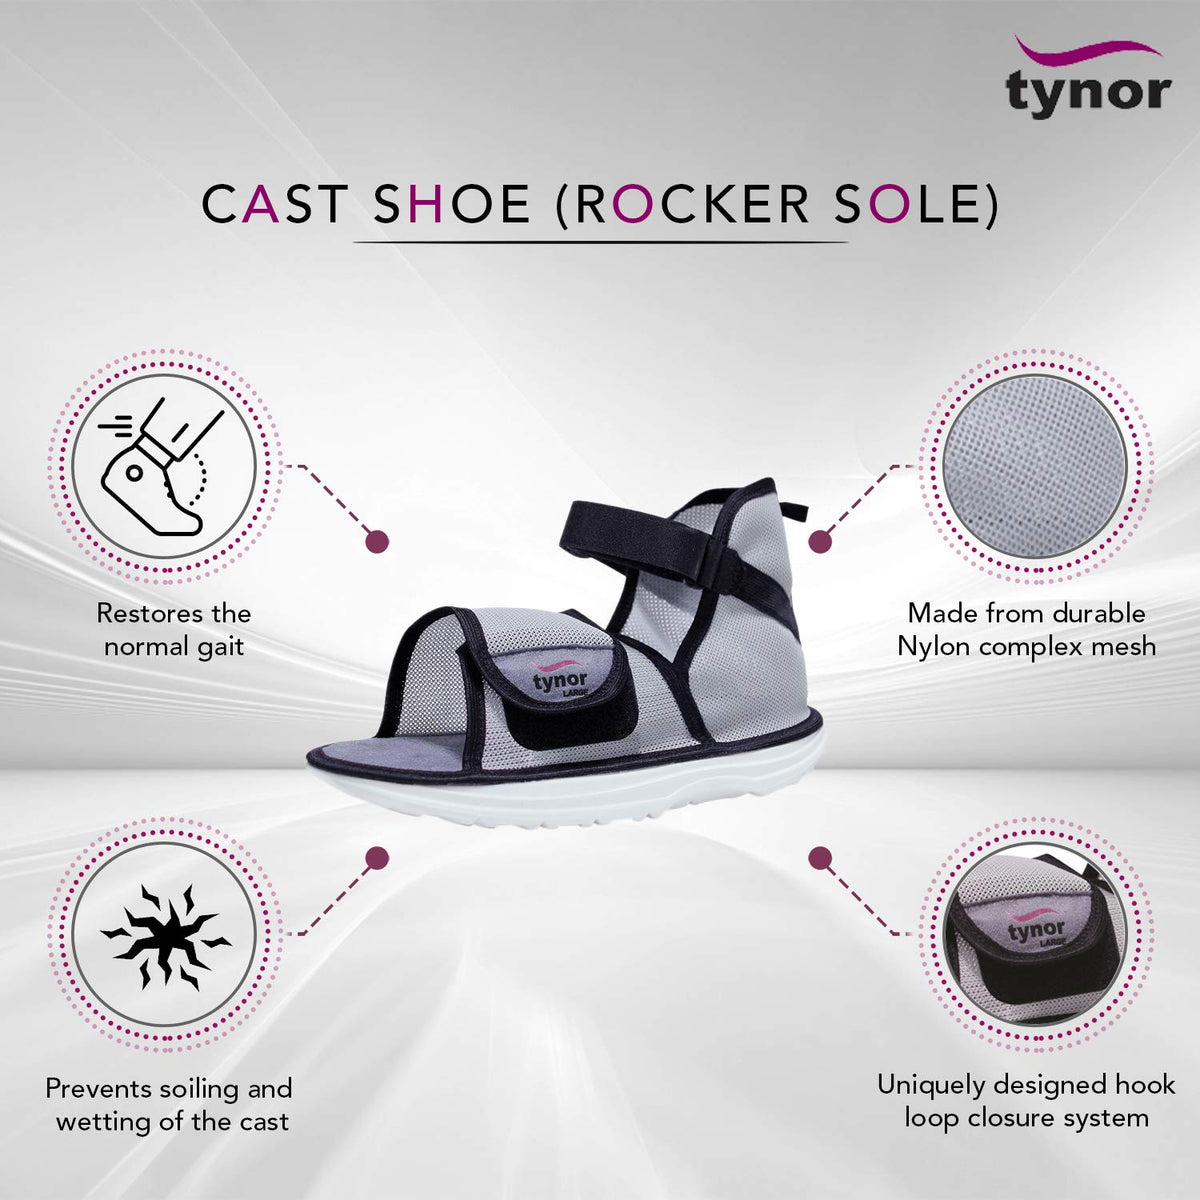 Cast Shoe Rocker Sole, For Plaster & Fracture Foot